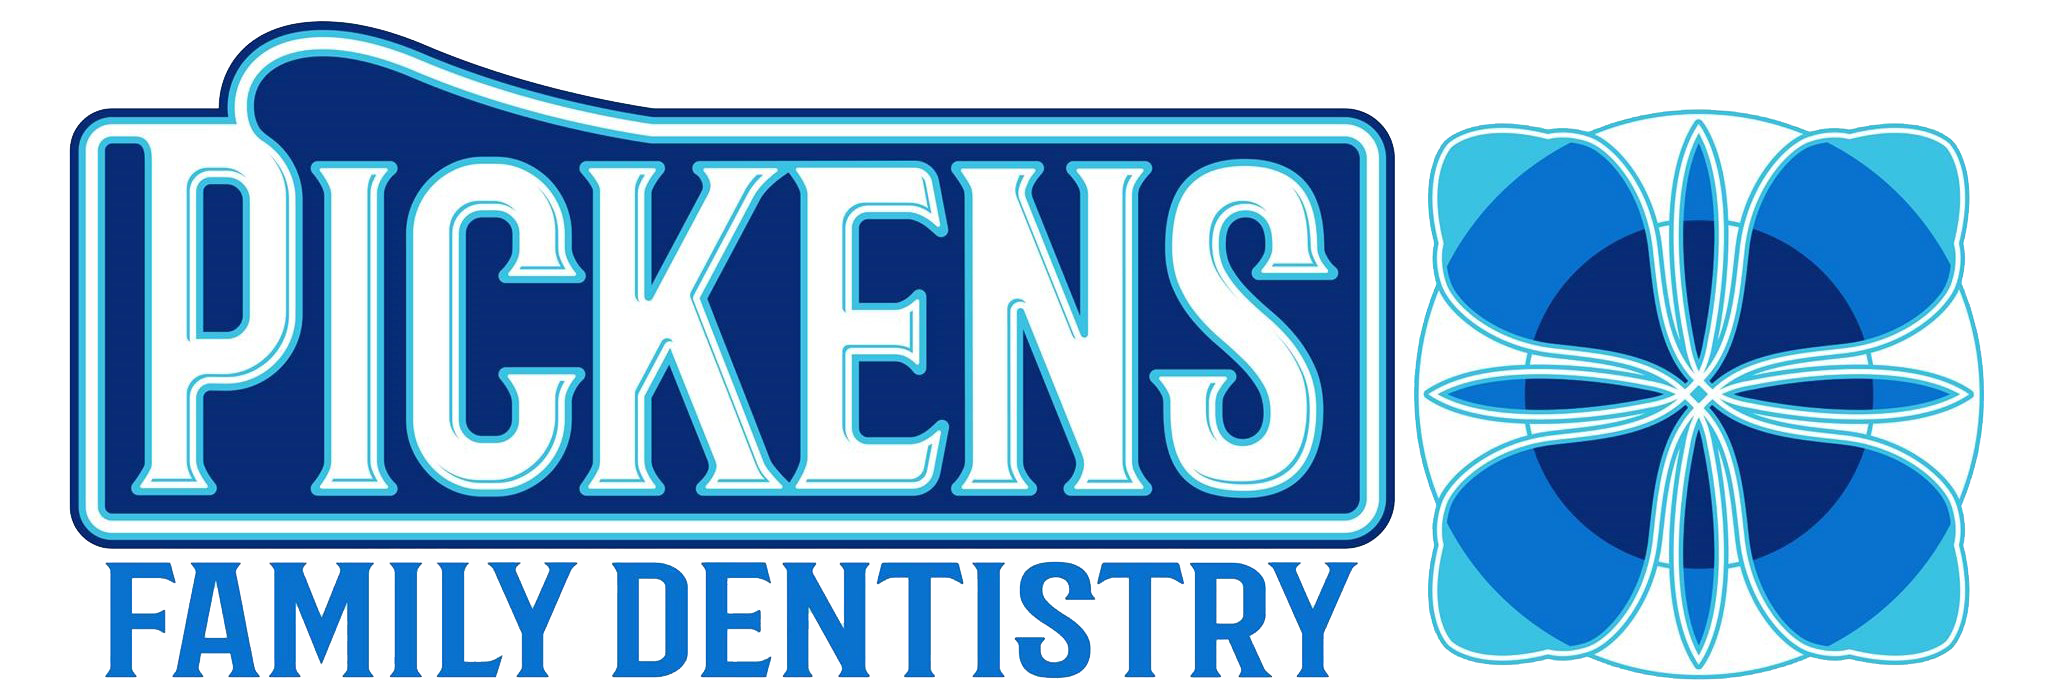 Pickens Family Dentistry